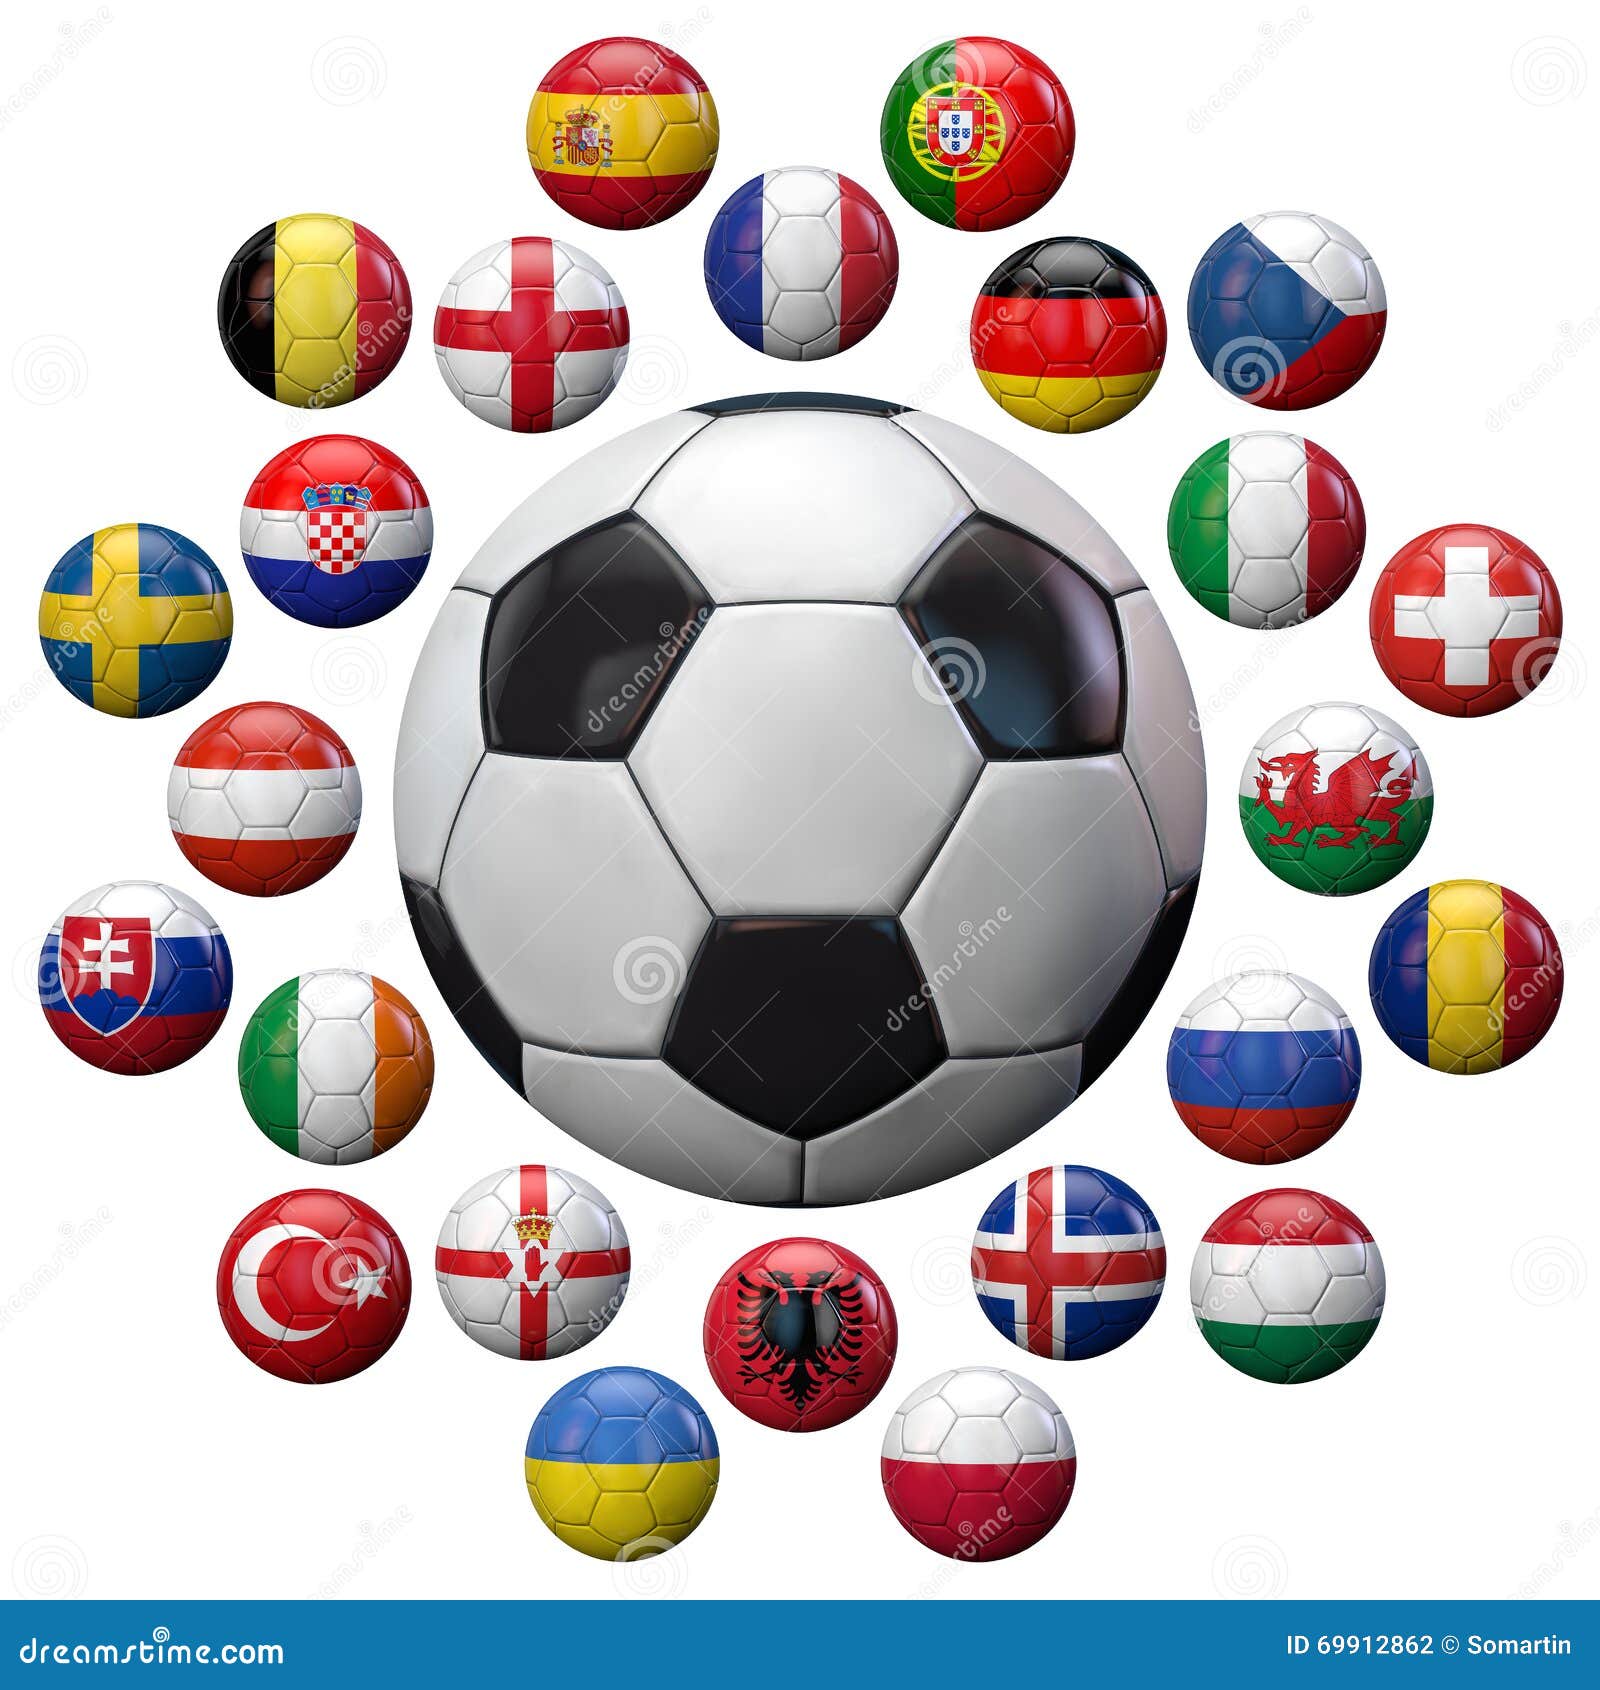 Euro Football : Euro Football Champ ROM - Super Nintendo (SNES